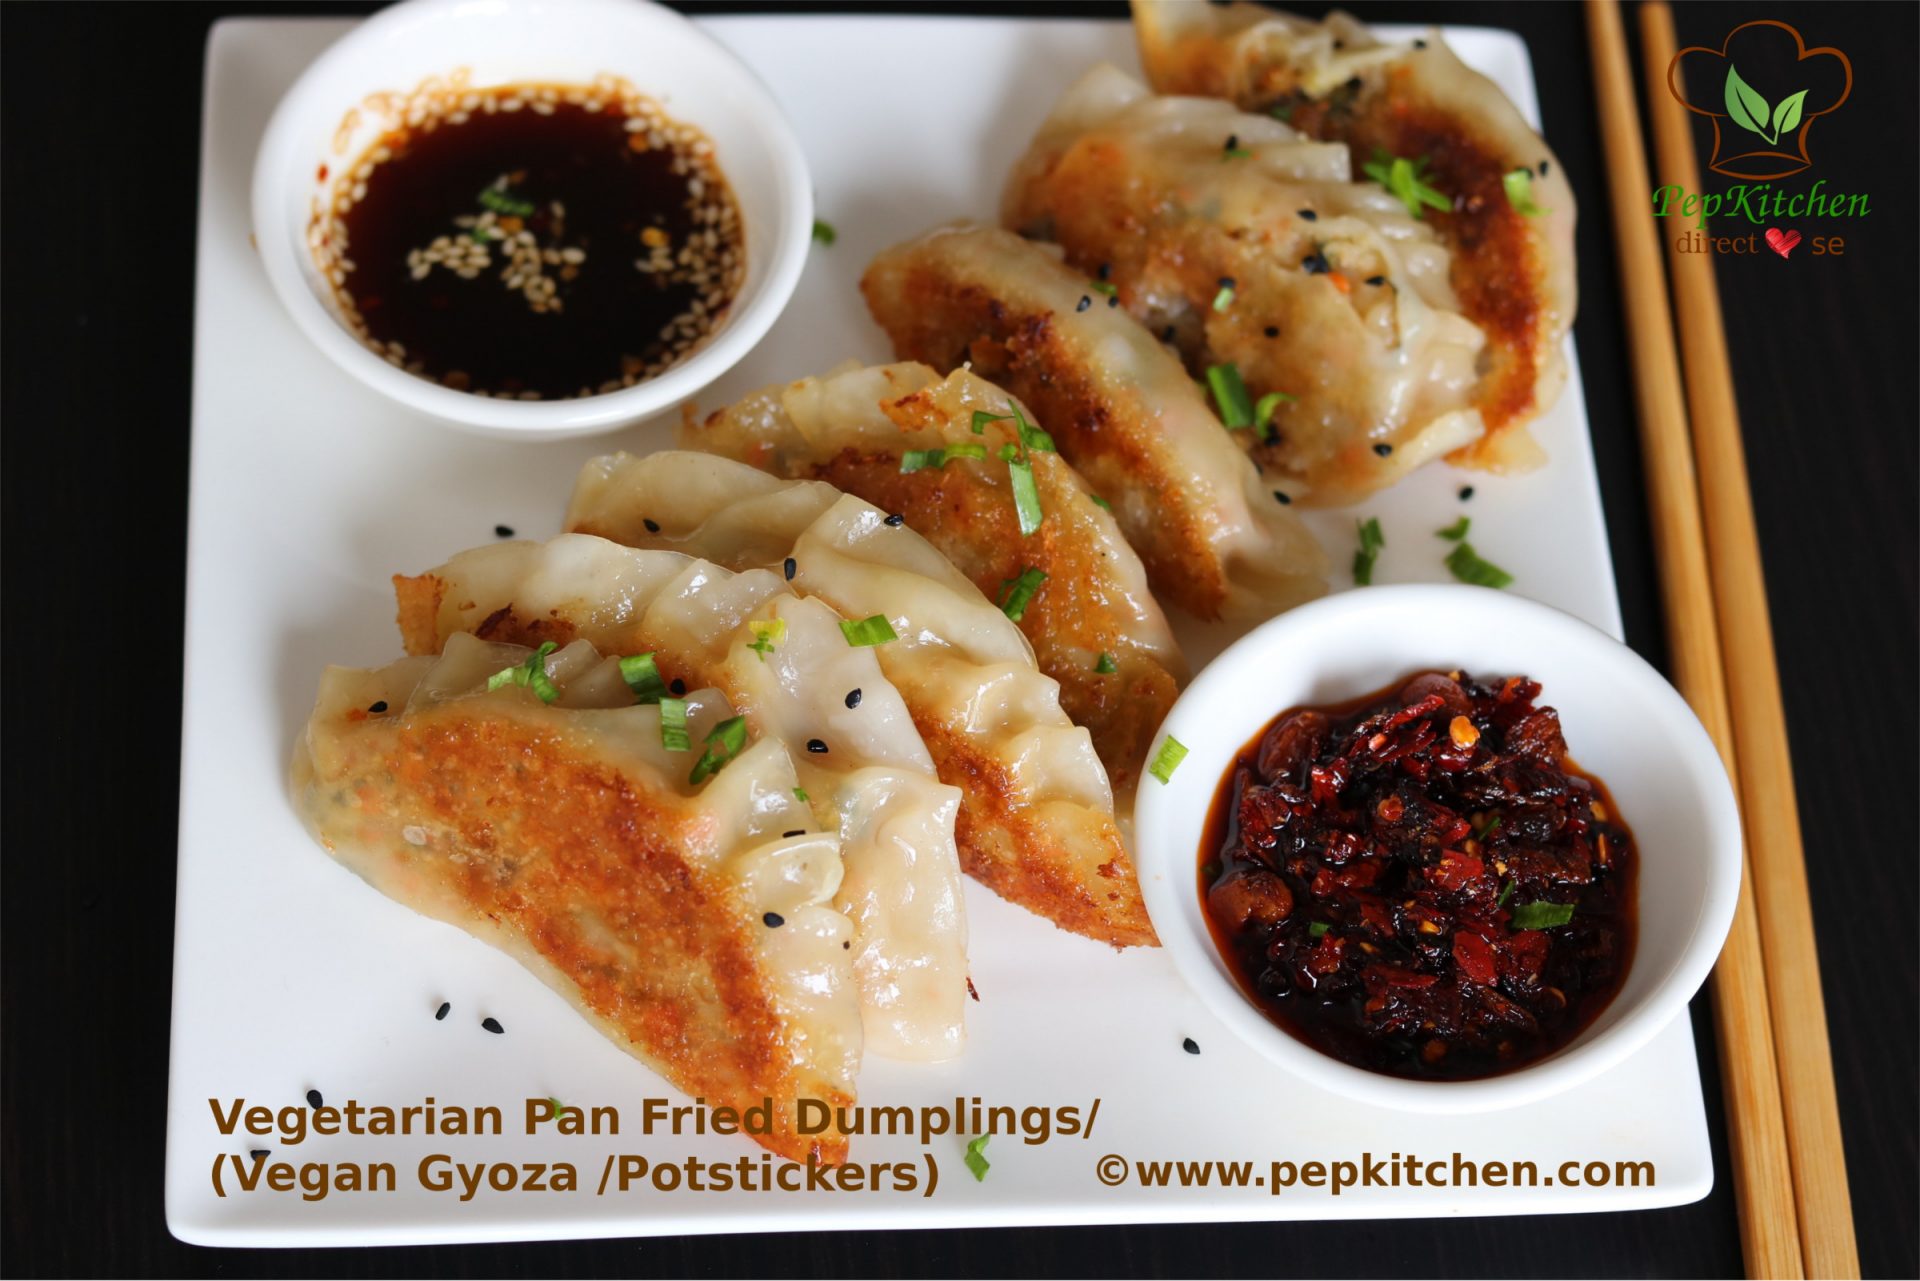 Vegetarian Pan Fried Dumplings Vegan Gyoza Potstickers Pepkitchen,Painting Baseboards Darker Than Walls